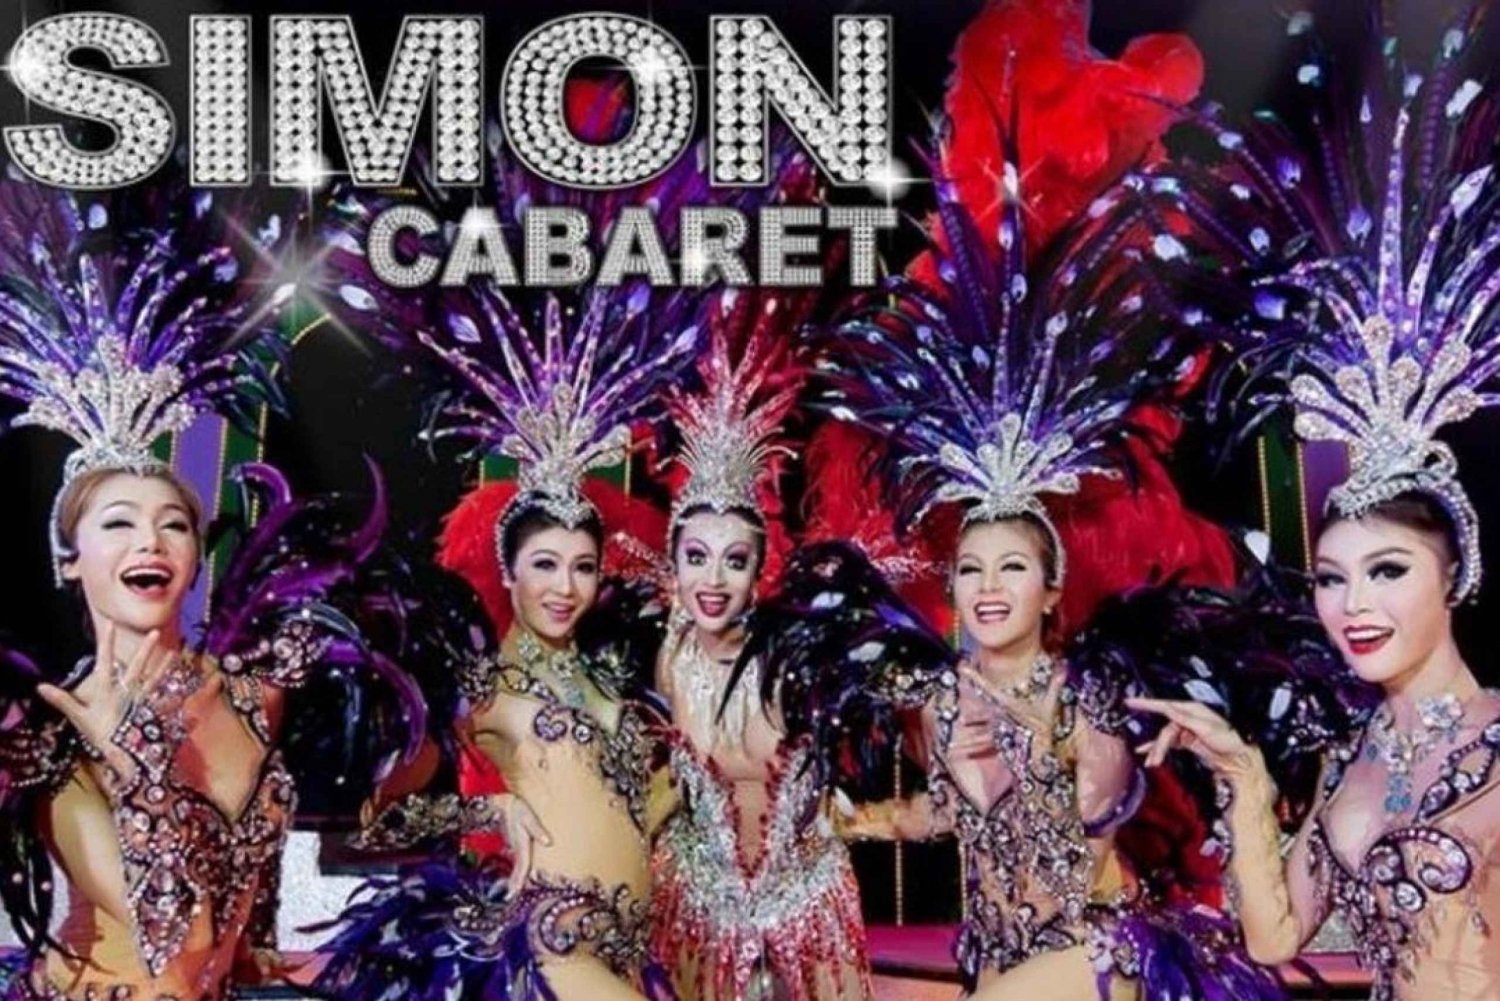 Phuket: Simon Cabaret Show Entrébillet med transport